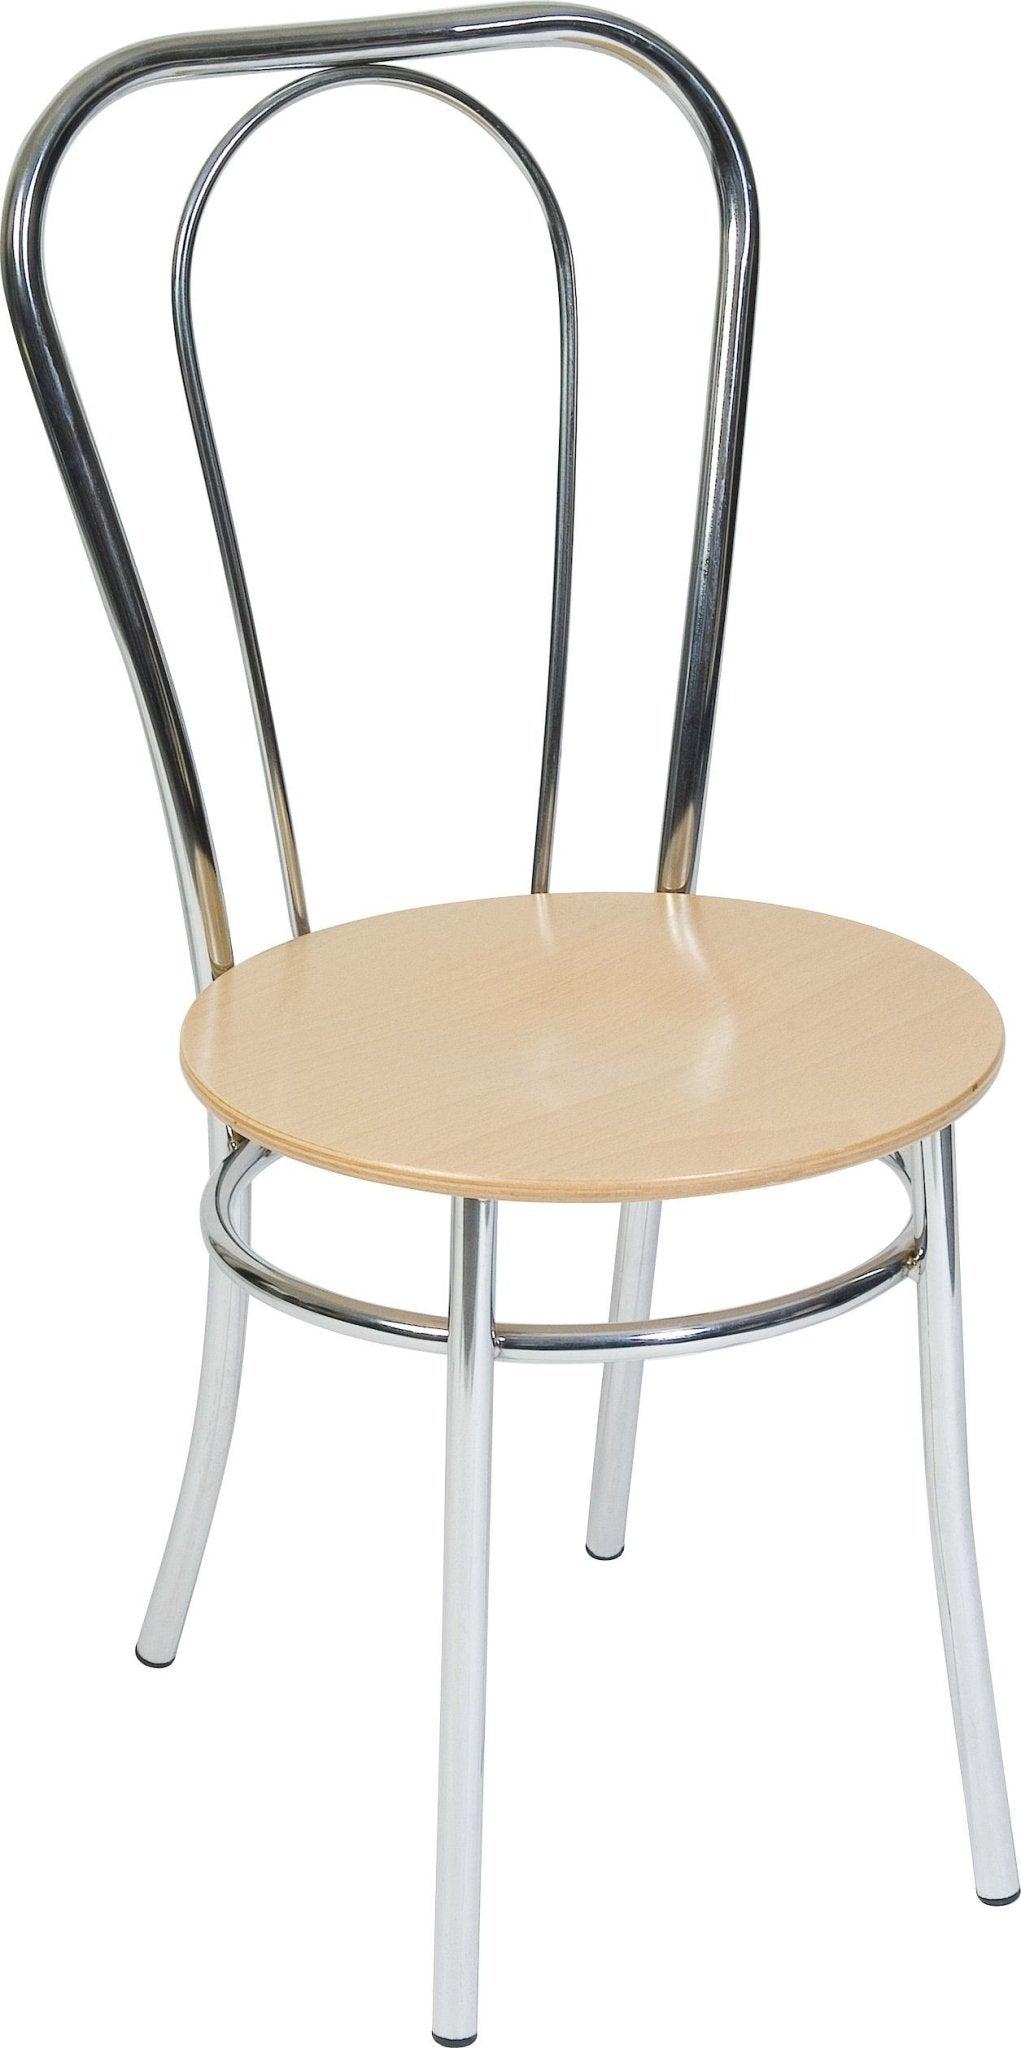 Bistro deluxe chair - crimblefest furniture - image 1